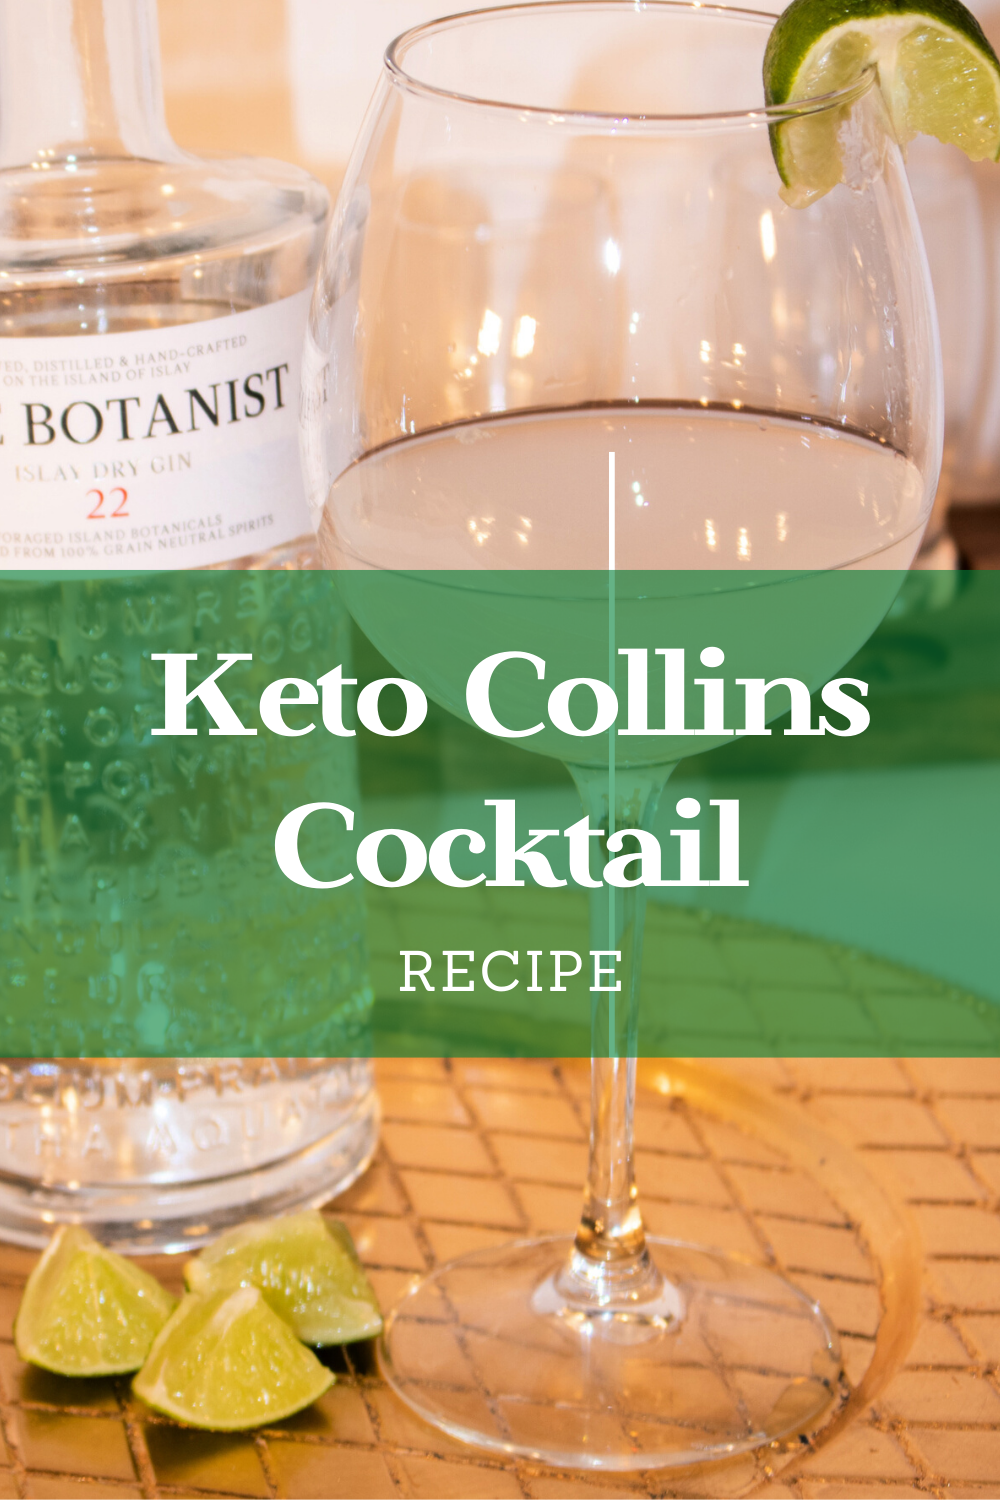 The Keto Collins Cocktail - A Keto Diet Delight